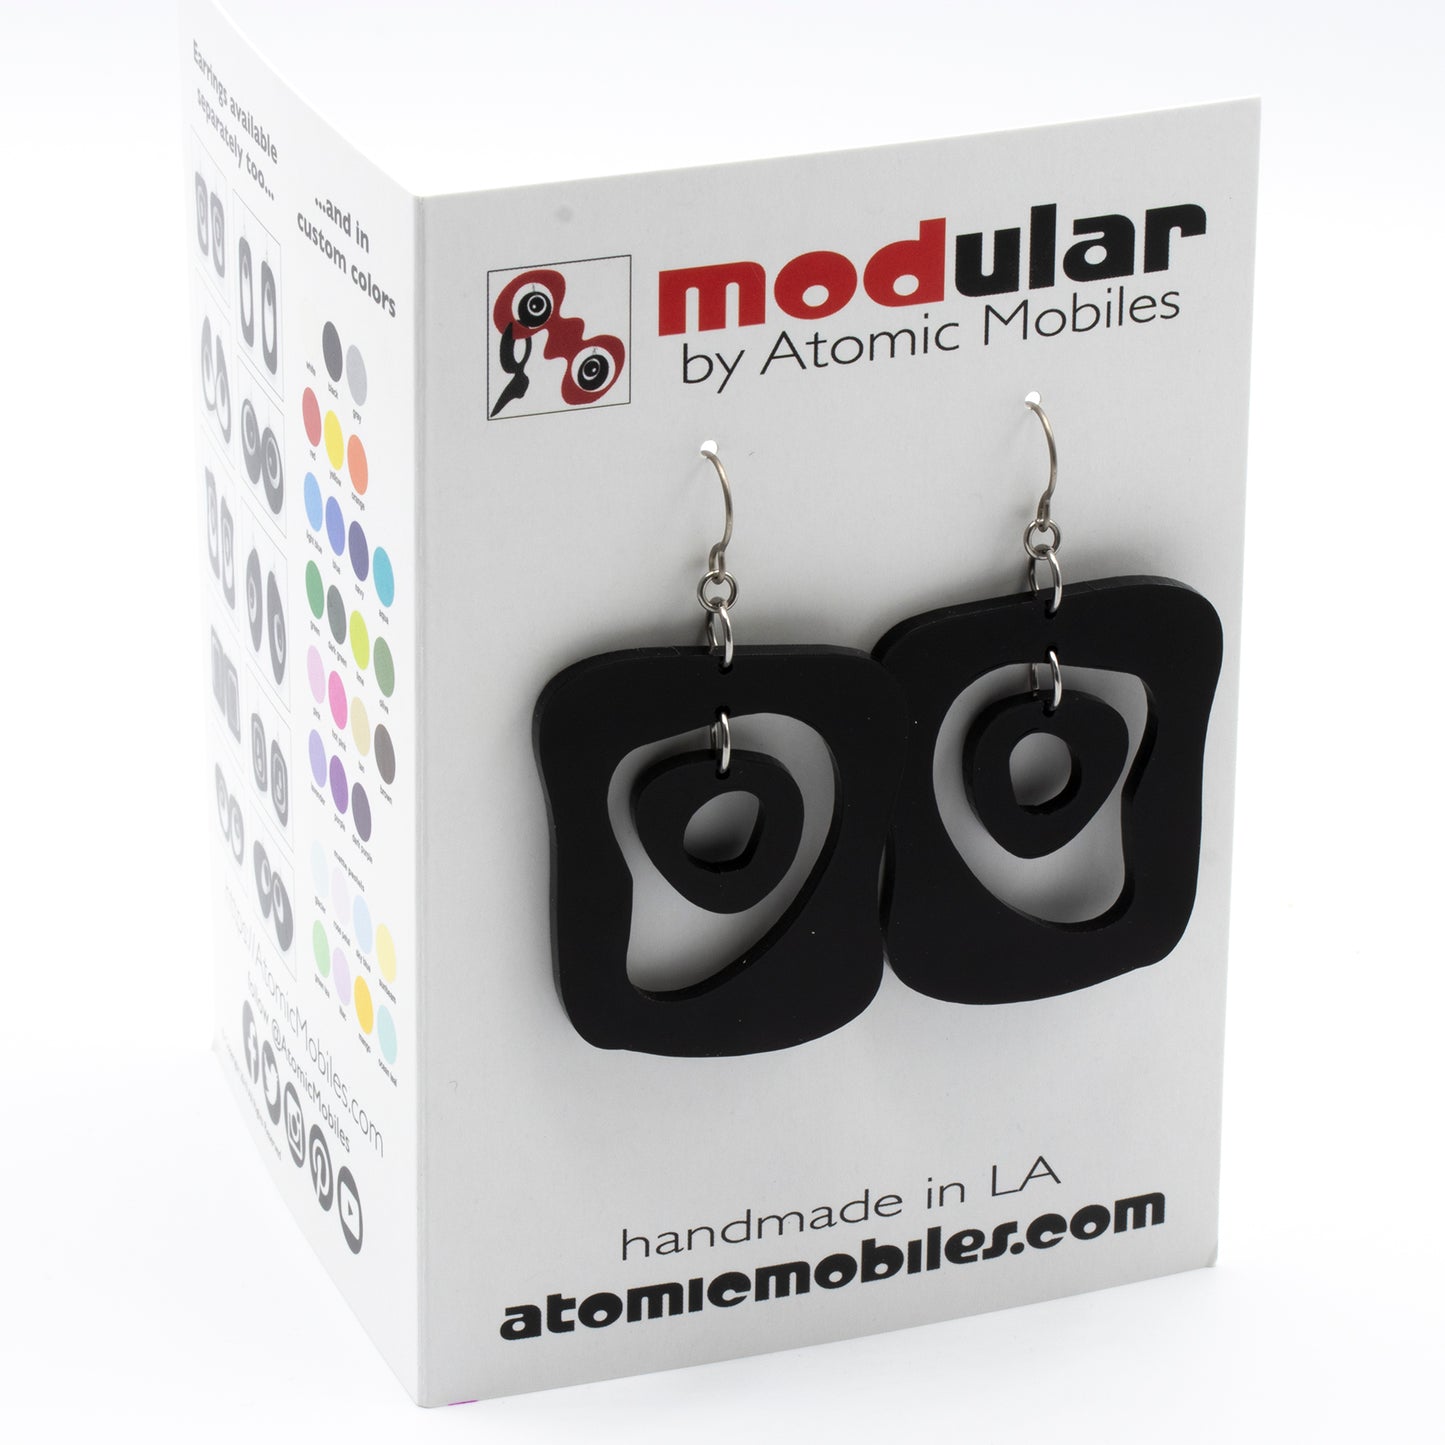 MODular Earrings Card - Mid Mod Statement Earrings by AtomicMobiles.com - mid century inspired modern art dangle earrings